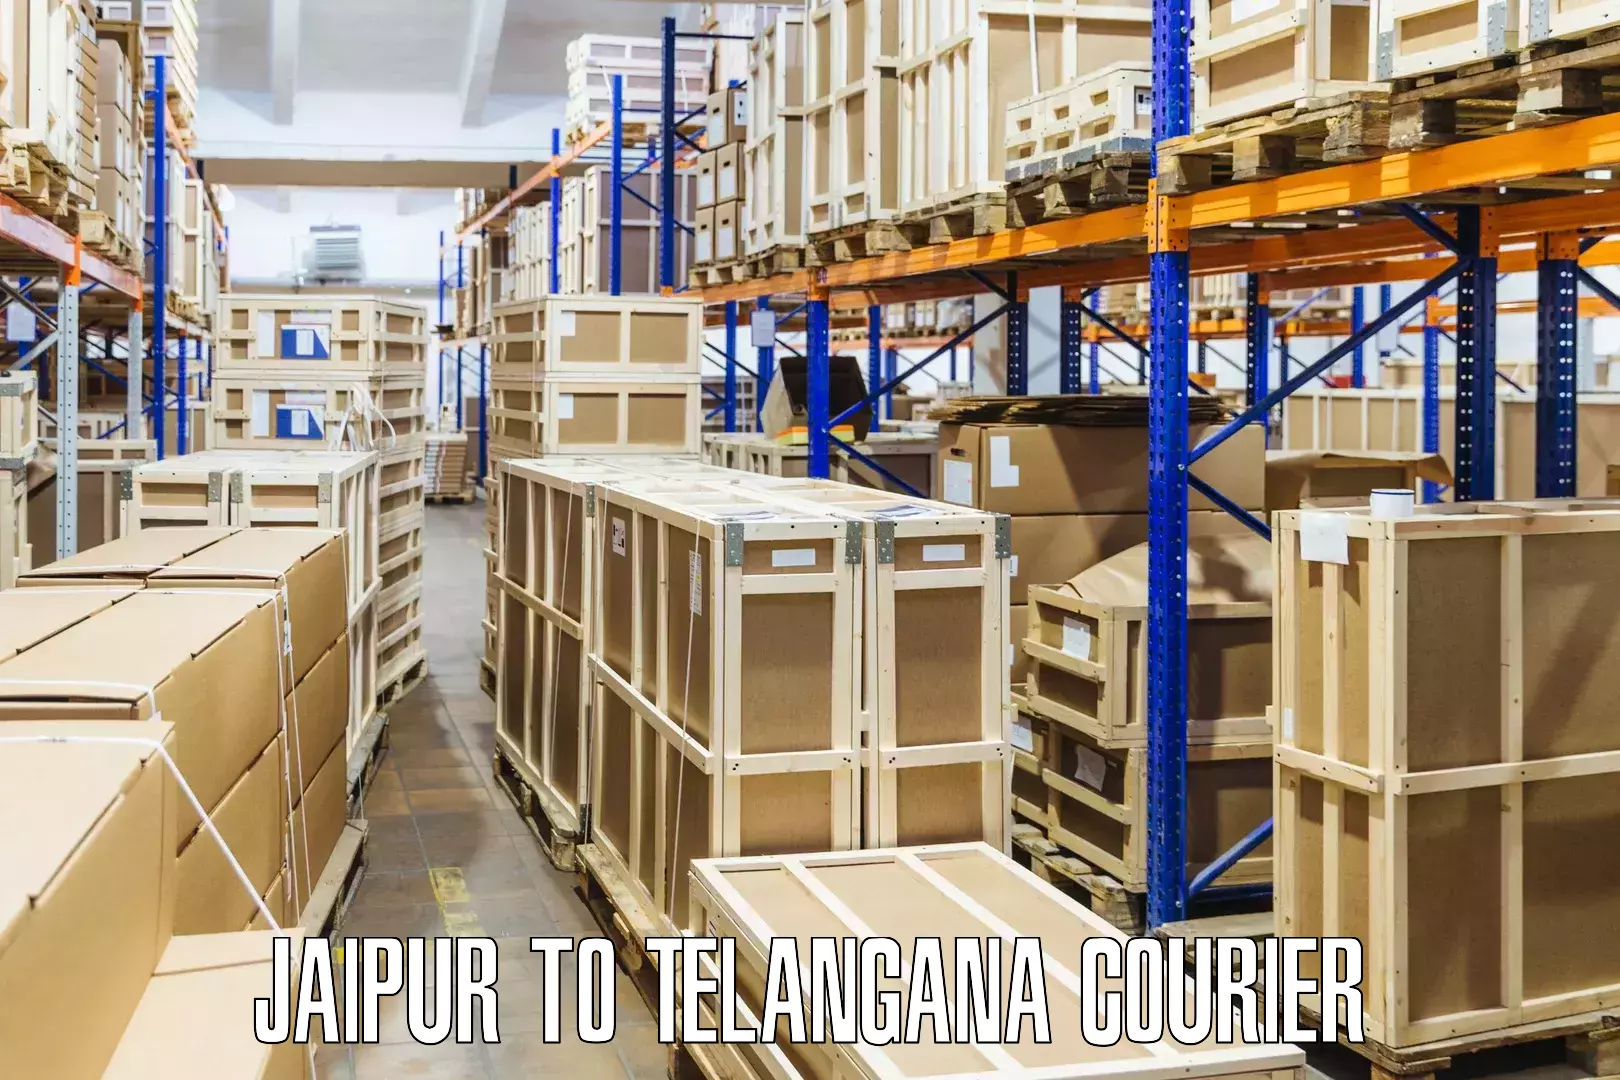 Courier service comparison in Jaipur to Nalgonda